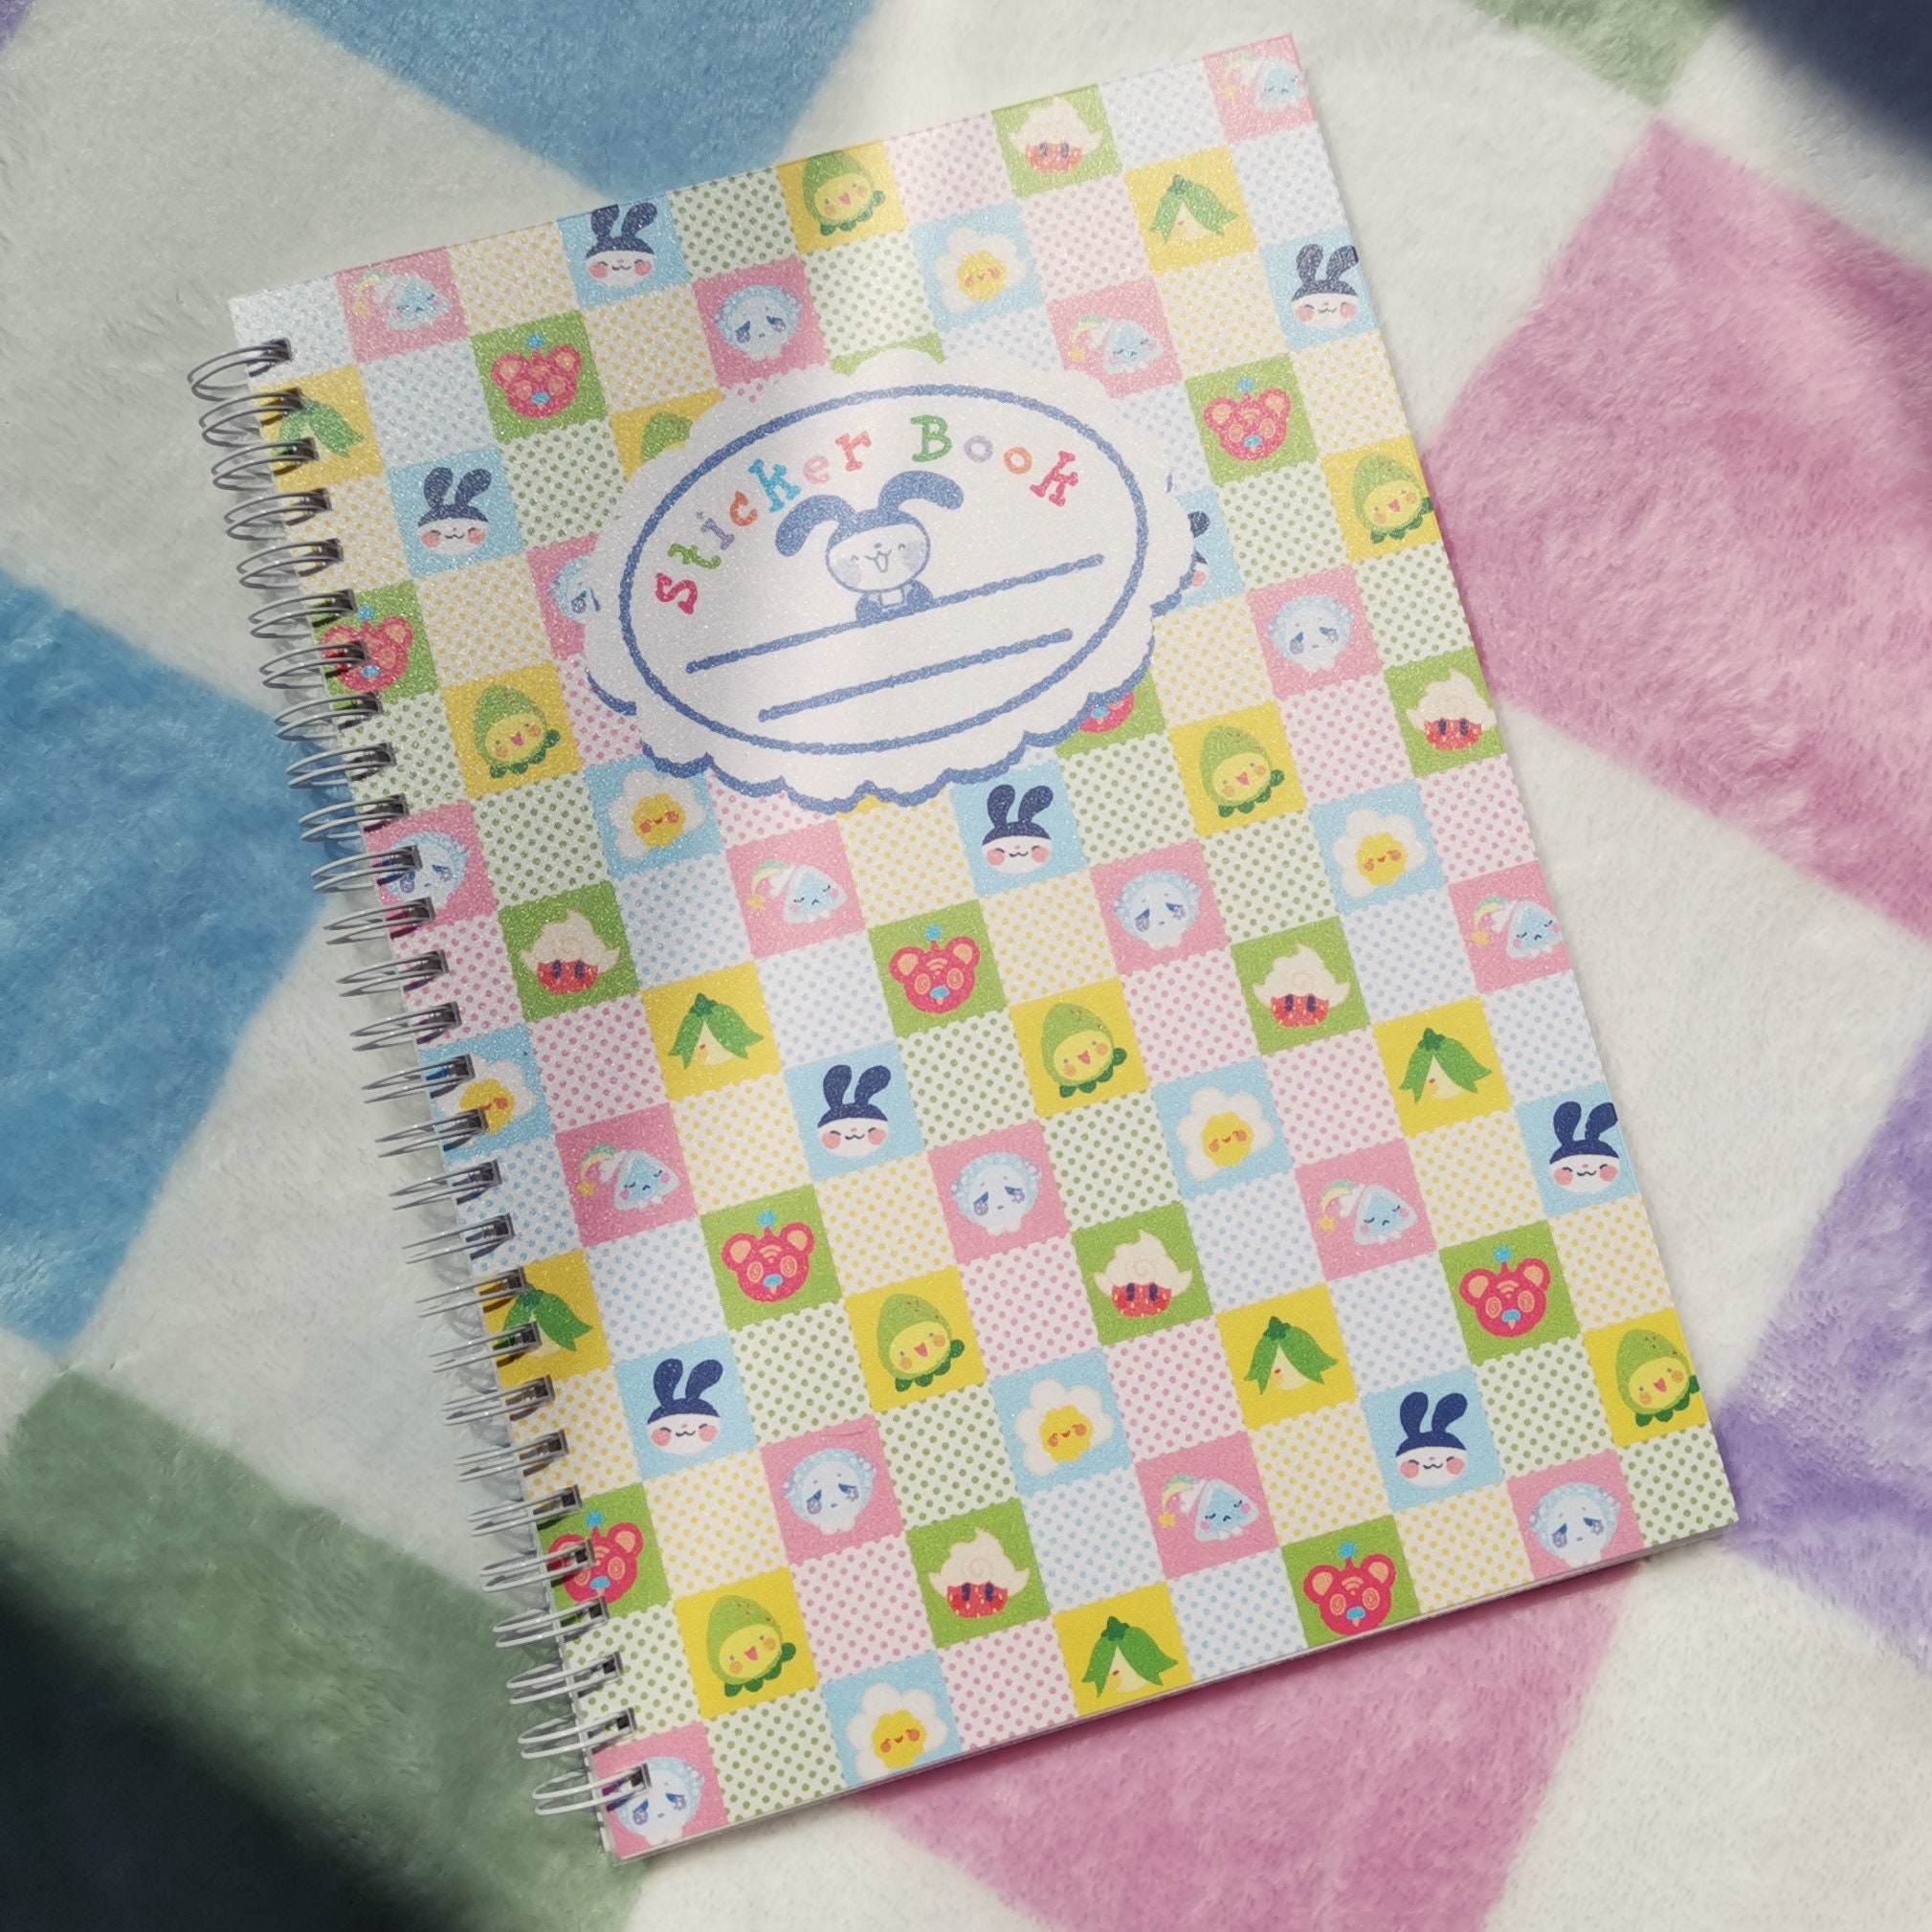 Reusable Sticker Book, Kawaii Sticker Album, Release Paper in